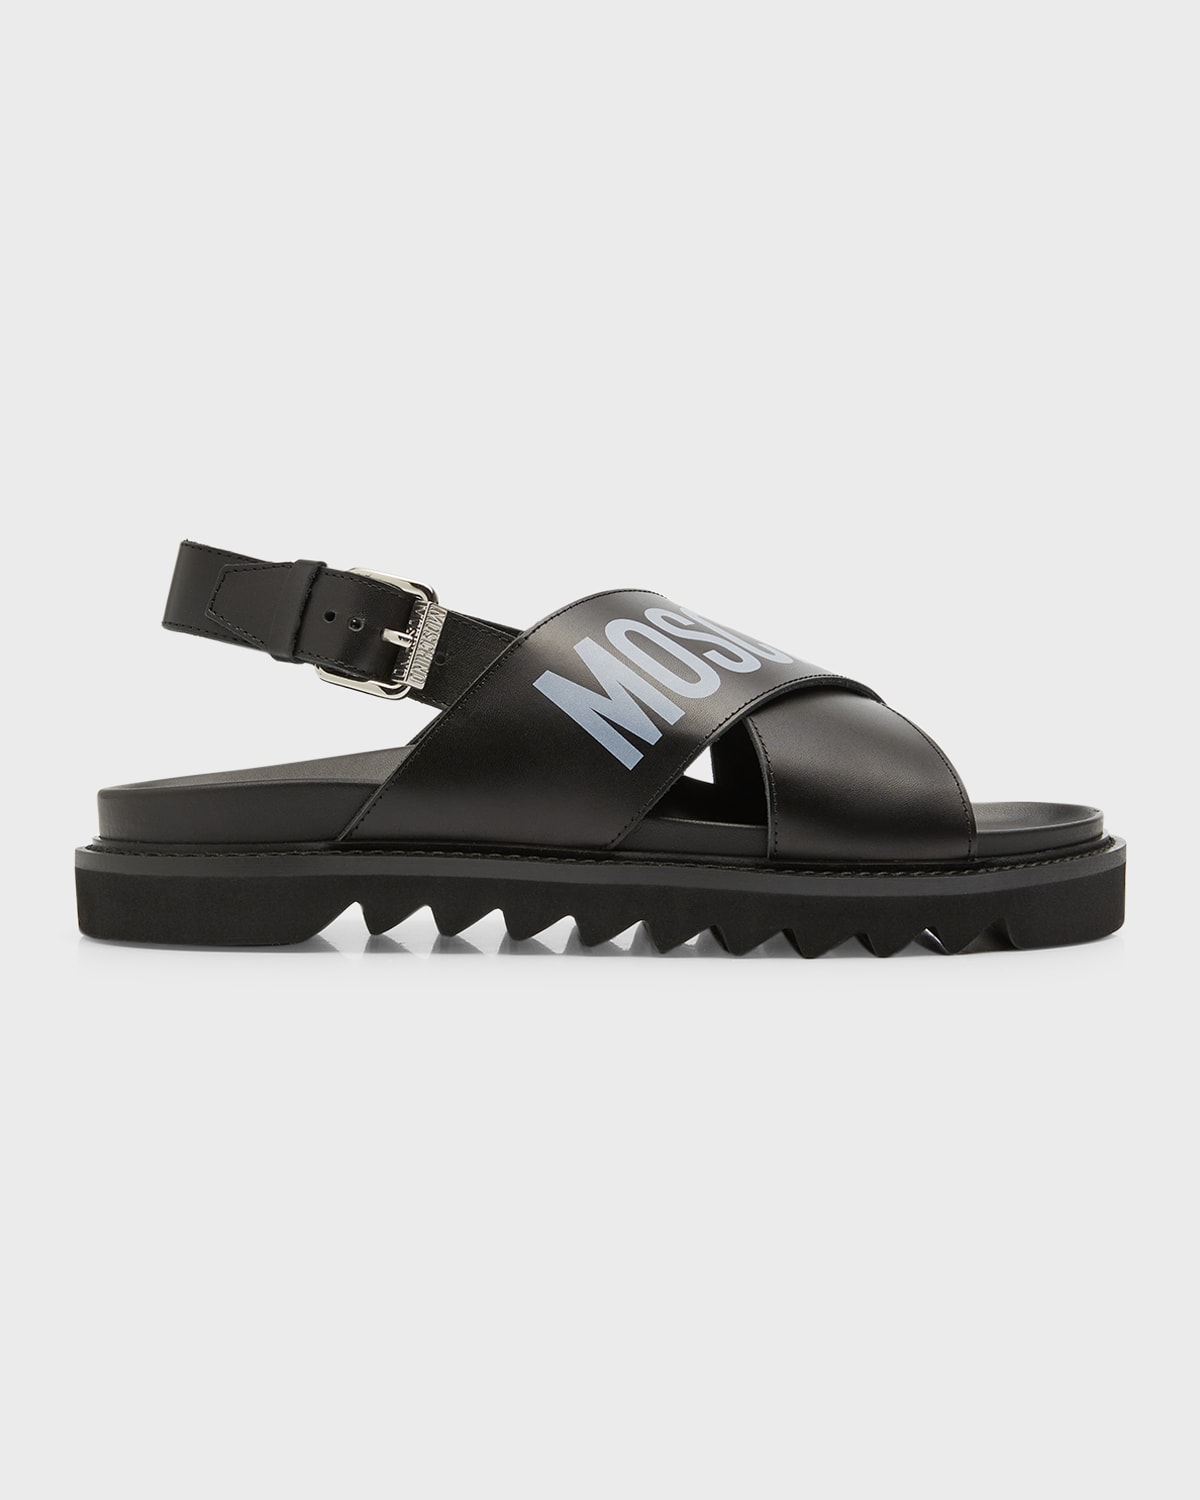 Moschino Men's Crisscross Leather Logo Sandals In Black Multi